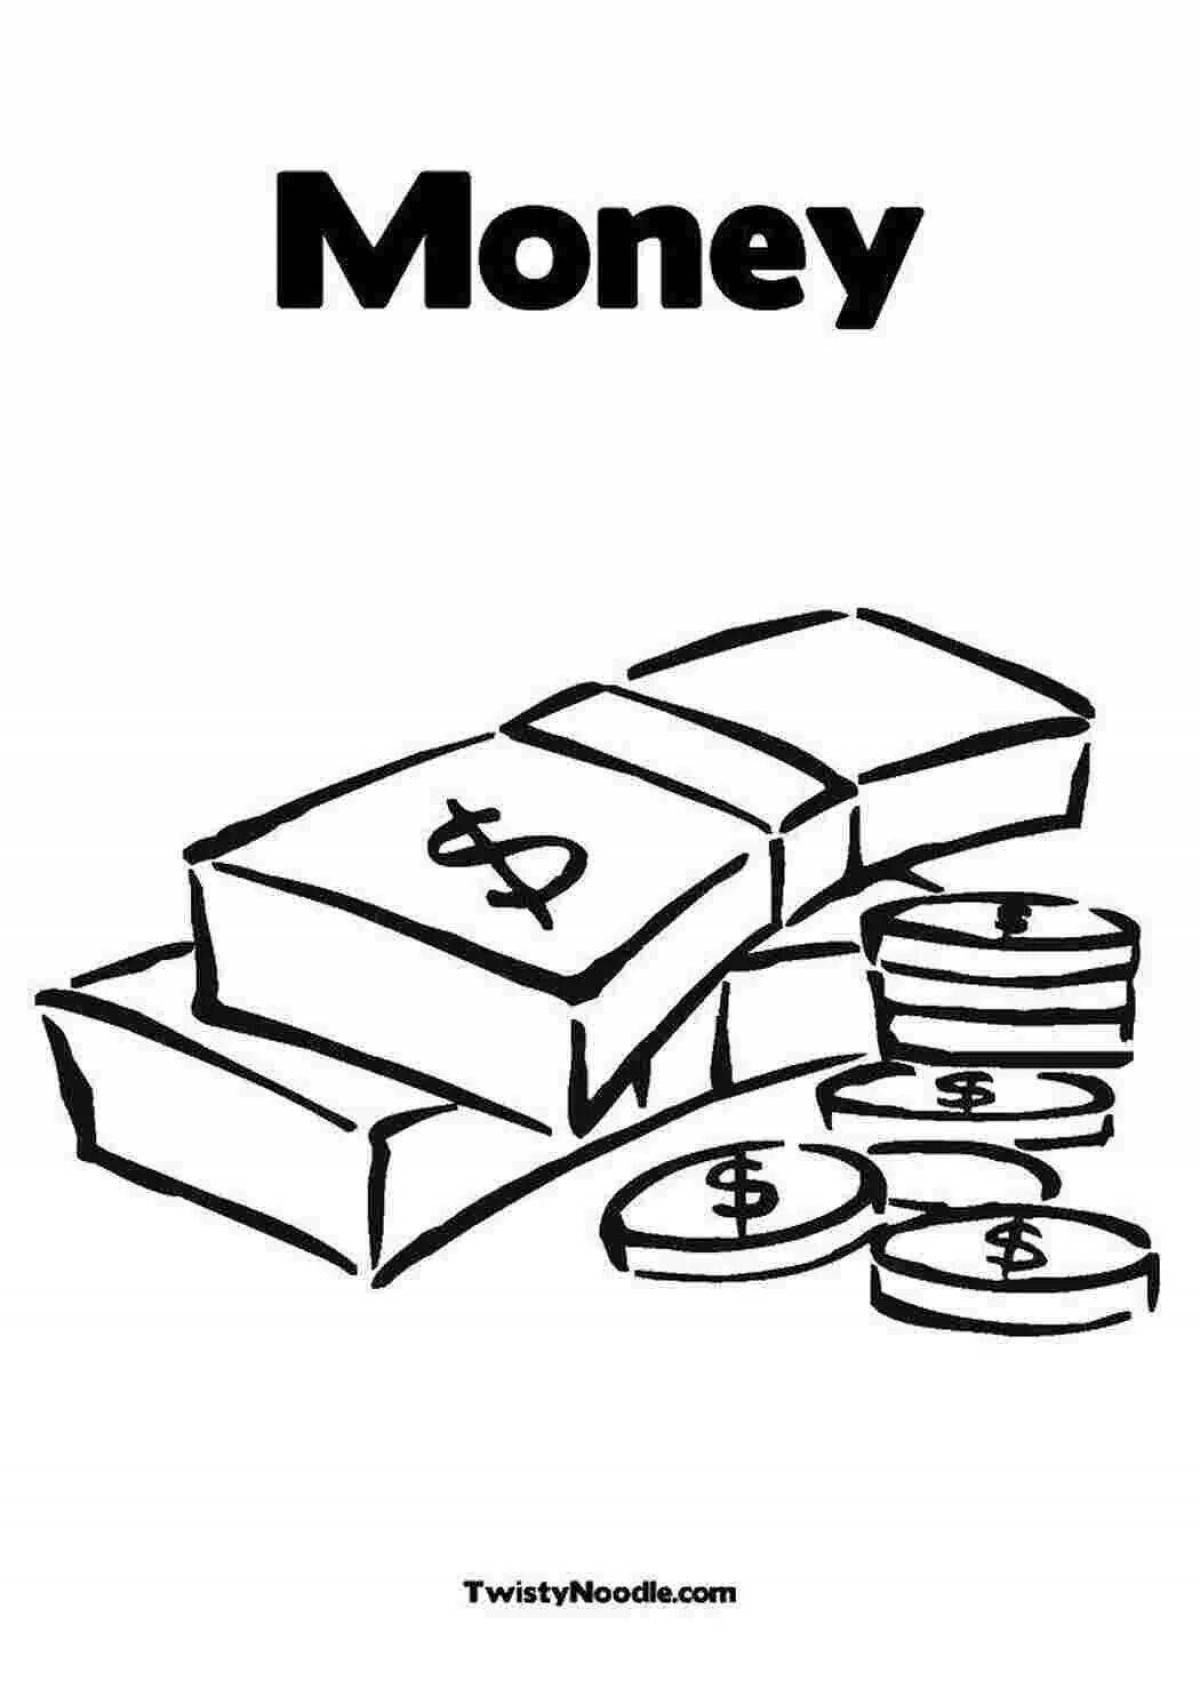 Fun money coloring design